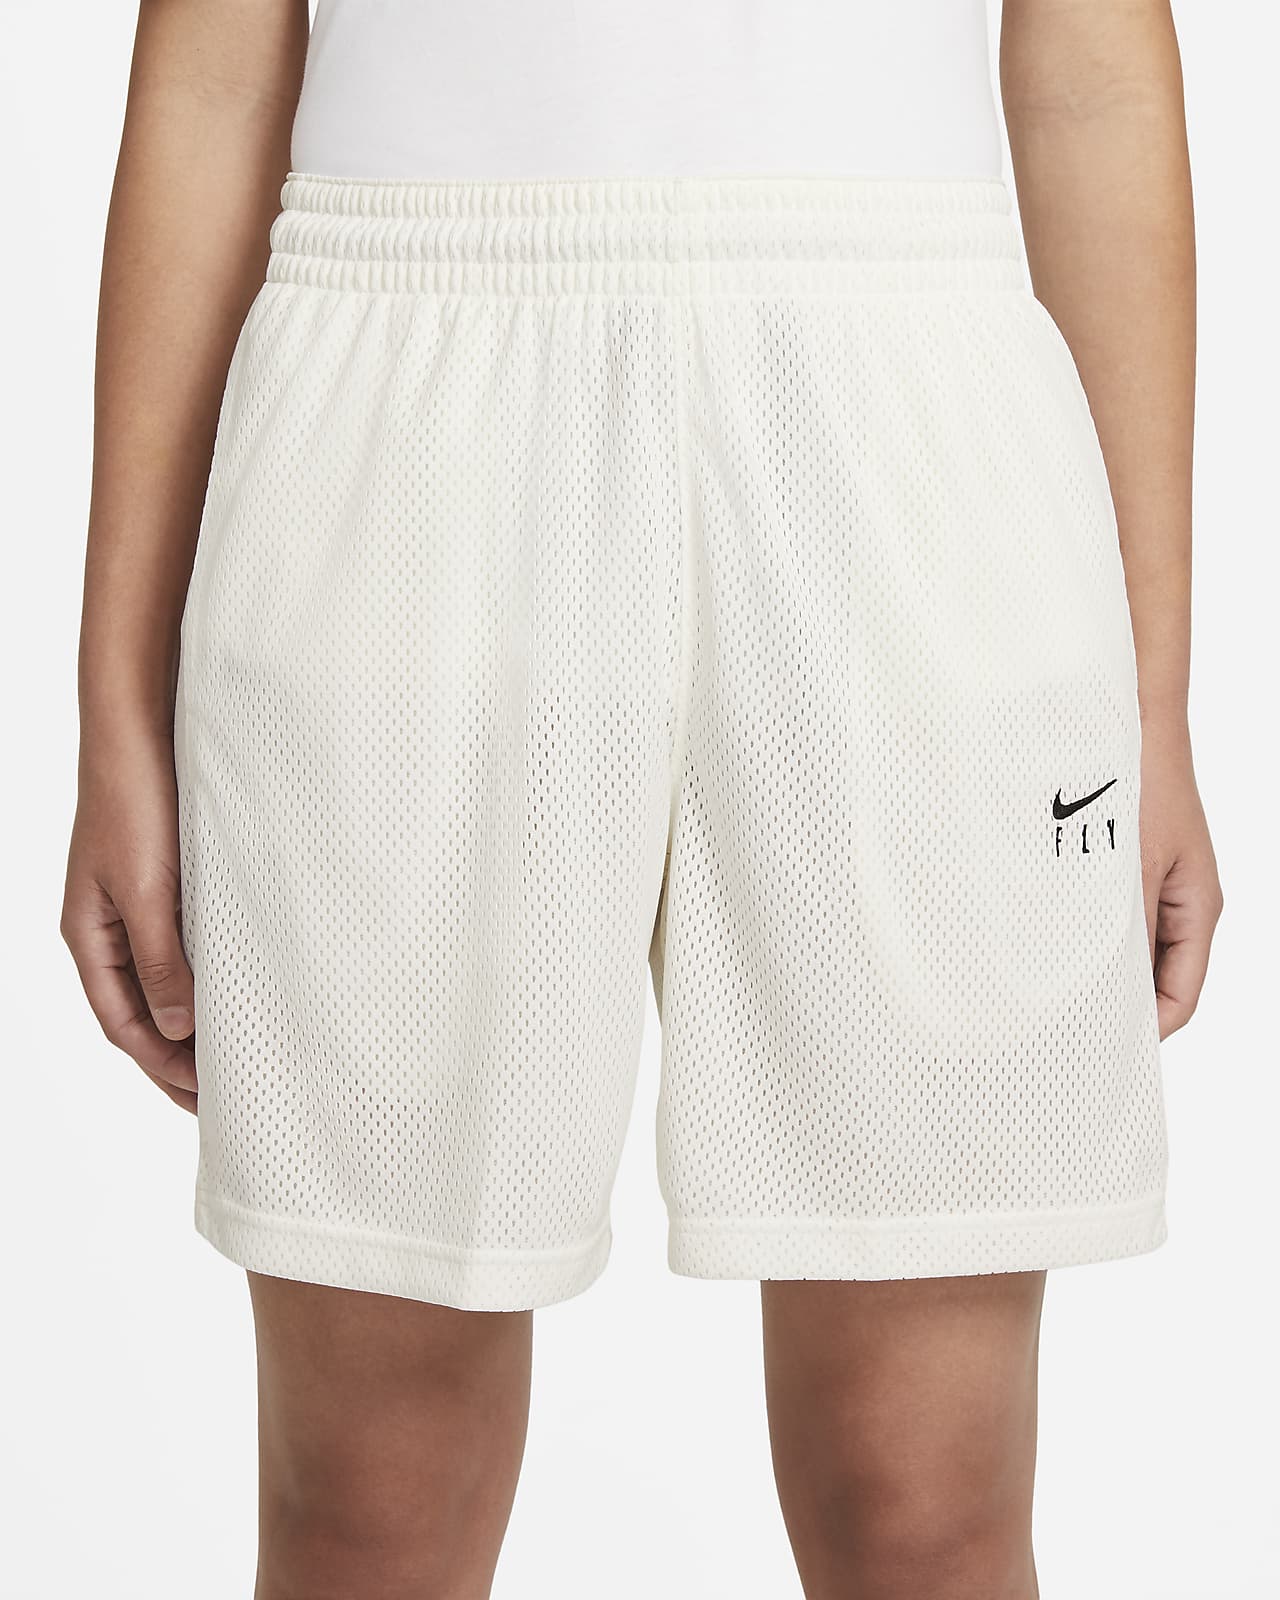 women's nike basketball shorts